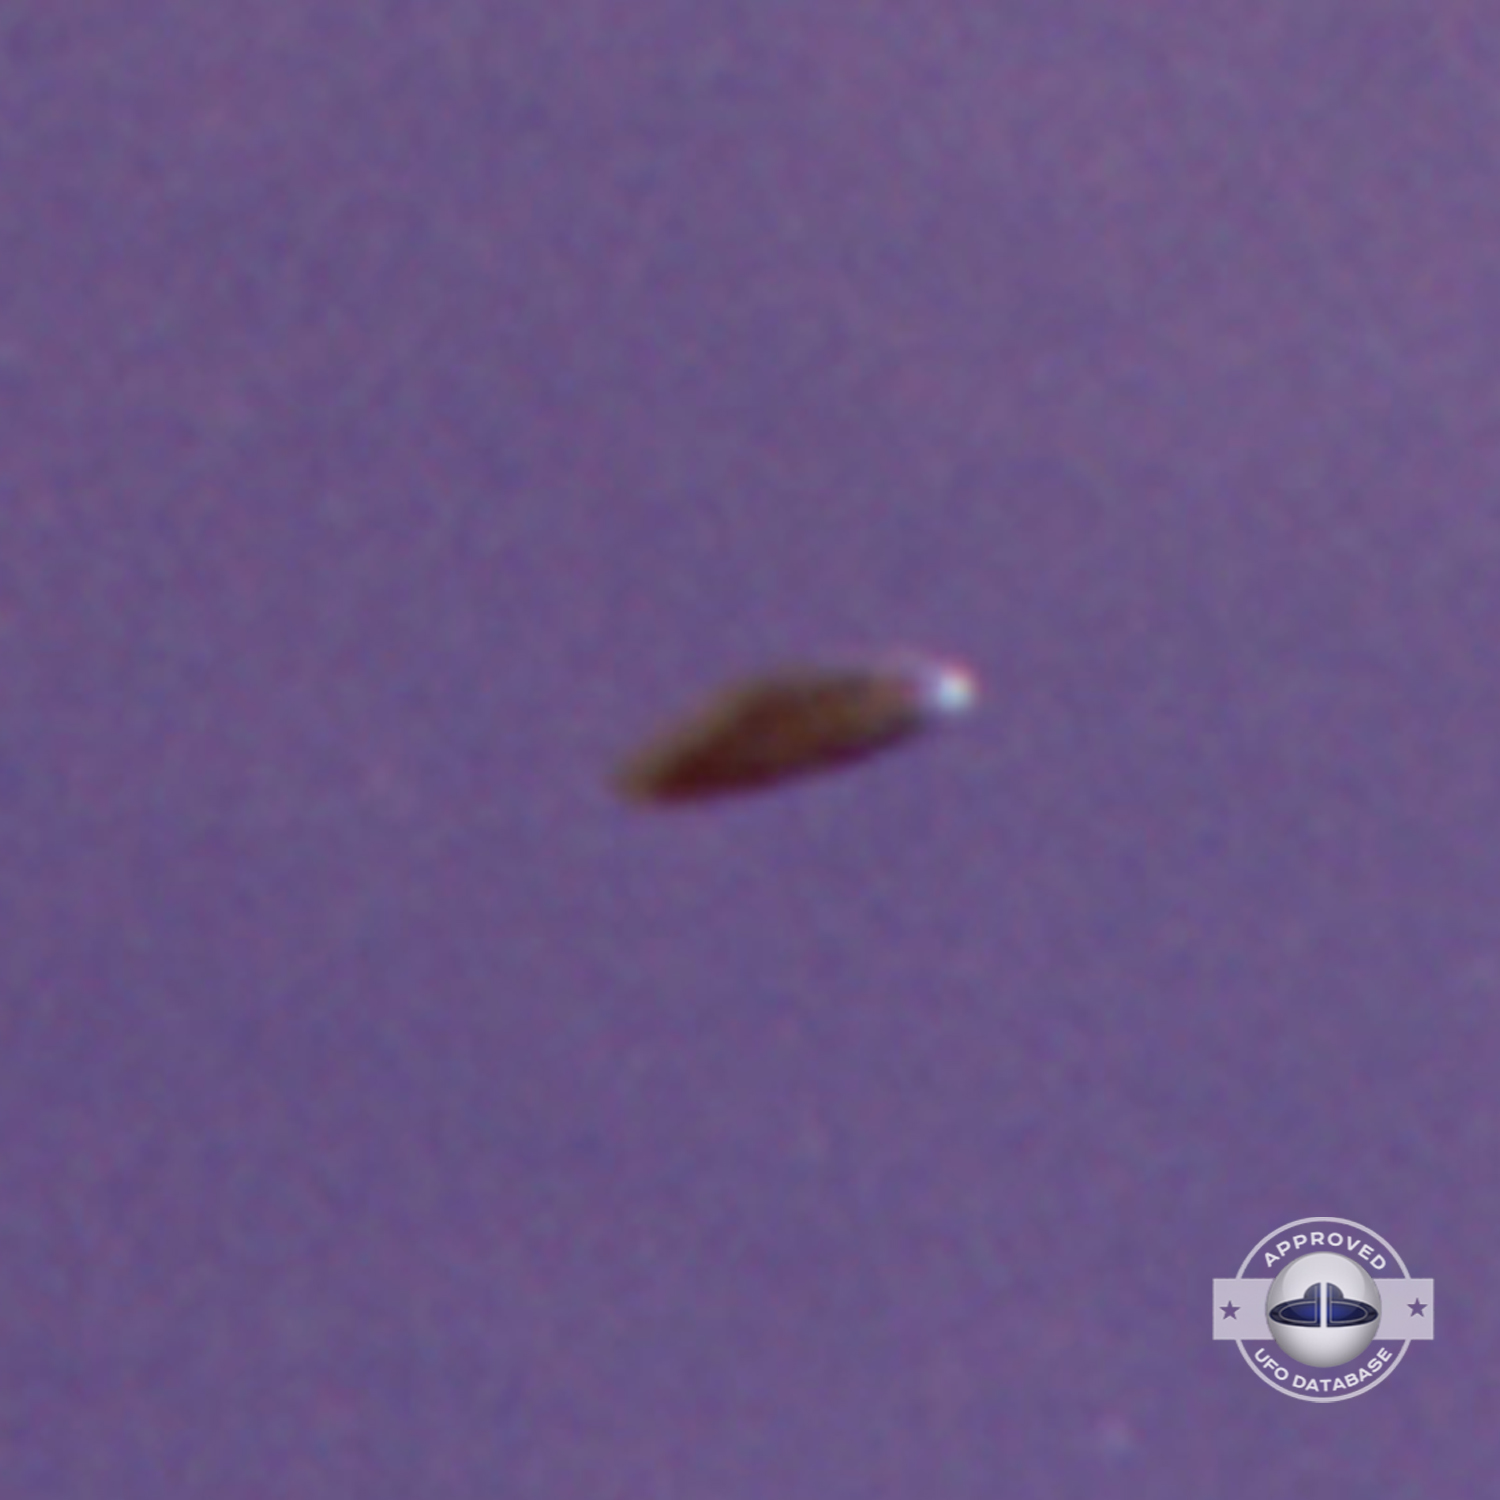 Rudi Nagora heard a strange noise and saw a shinning silver UFO UFO Picture #81-6